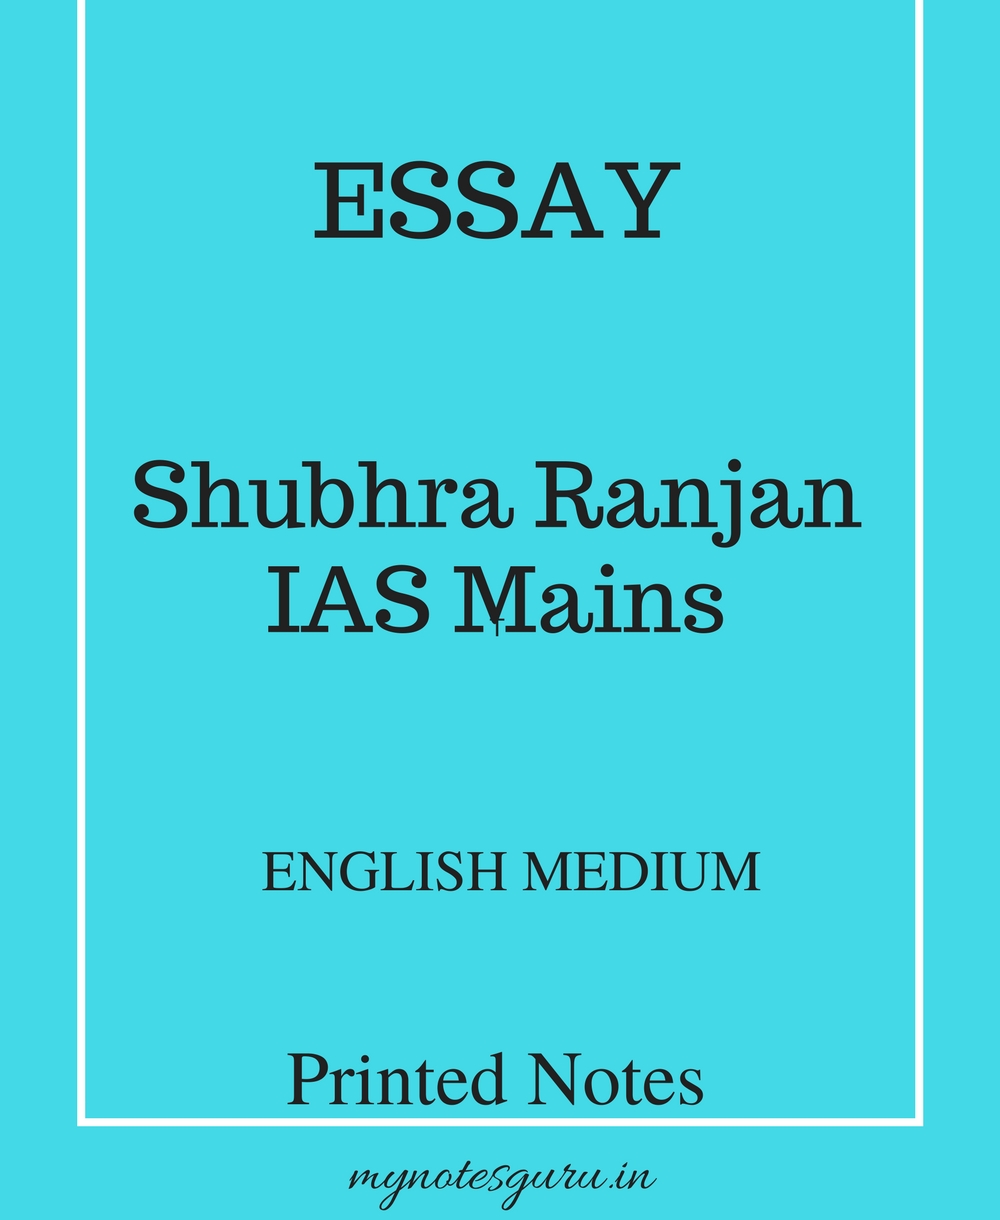 shubhra ranjan essay book pdf